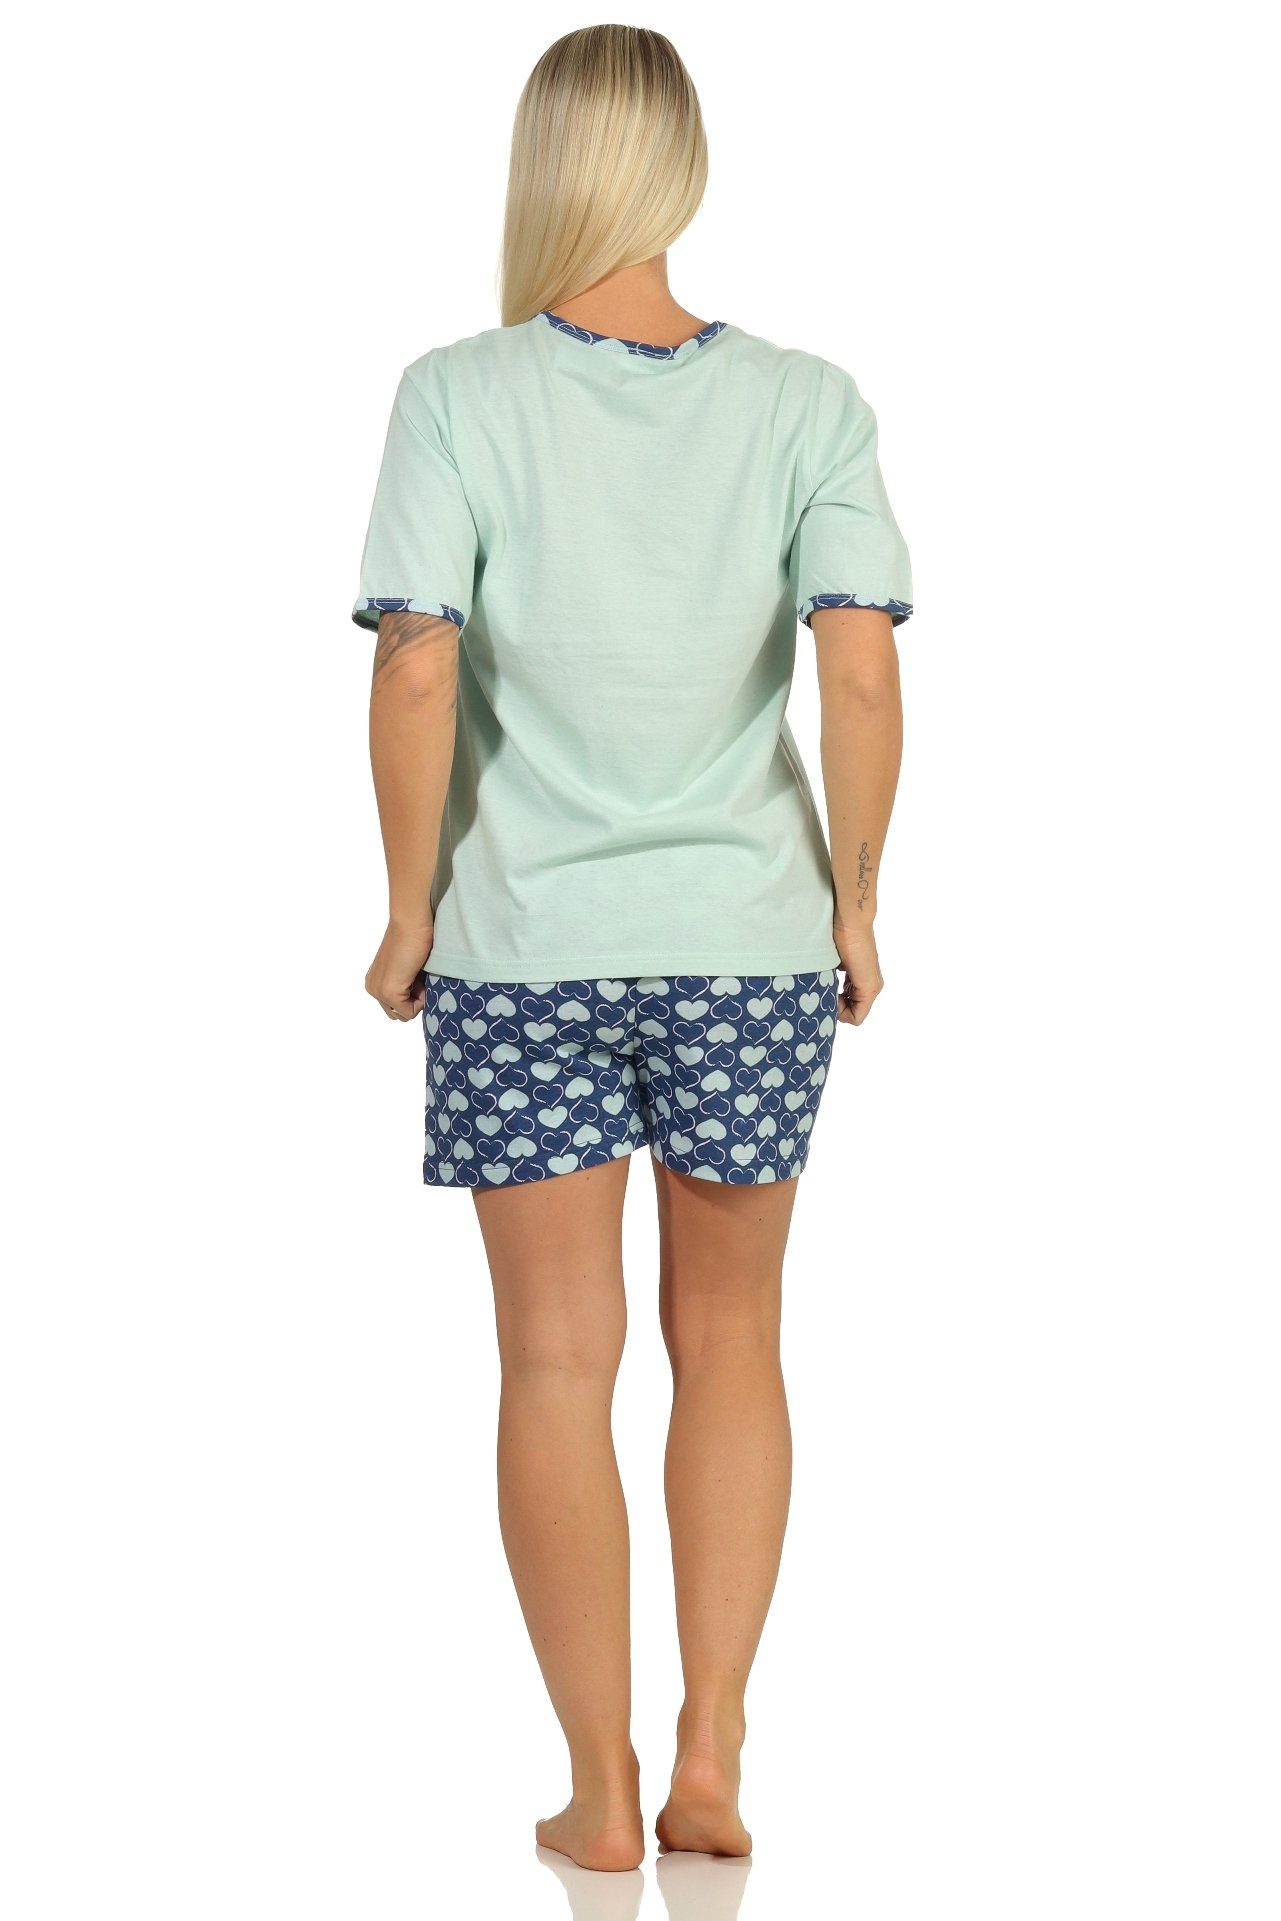 122 Pyjama Pyjama 10 - Damen Schlafanzug Herz-Design im Shorty Normann türkis 603 RELAX by kurzarm